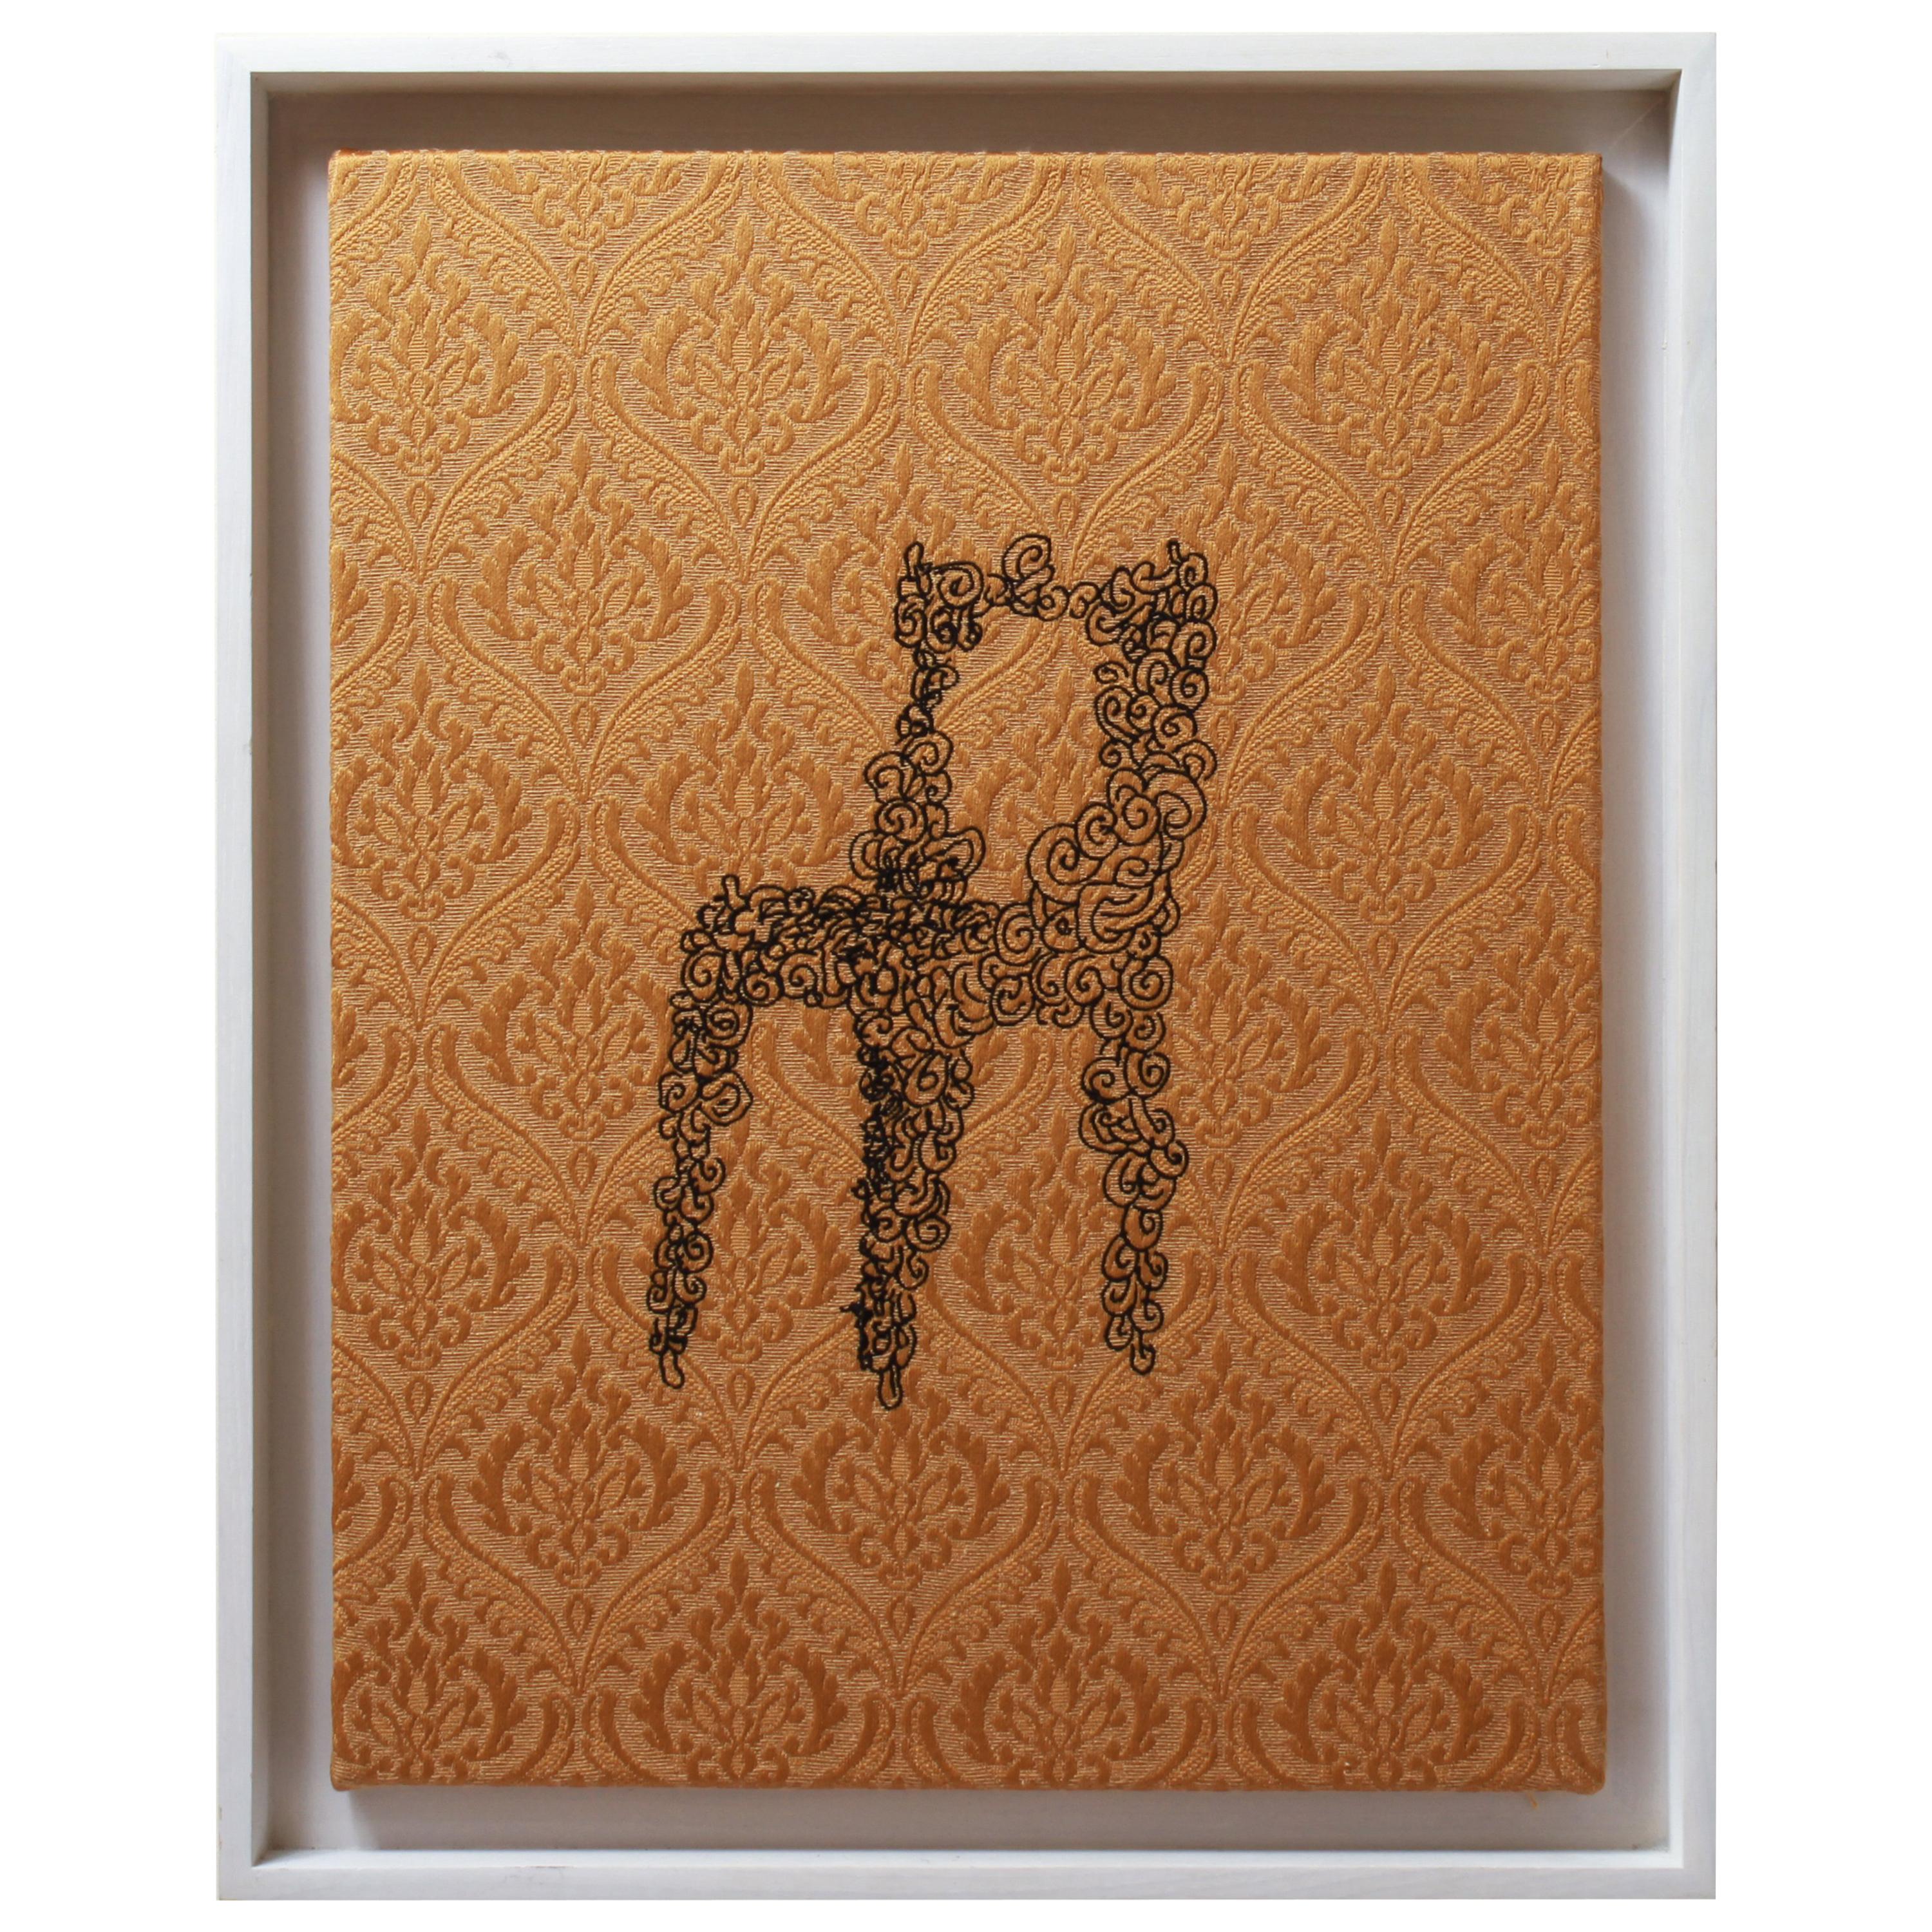 David Byrne 'Macaroni' Embroidery on Upholstery